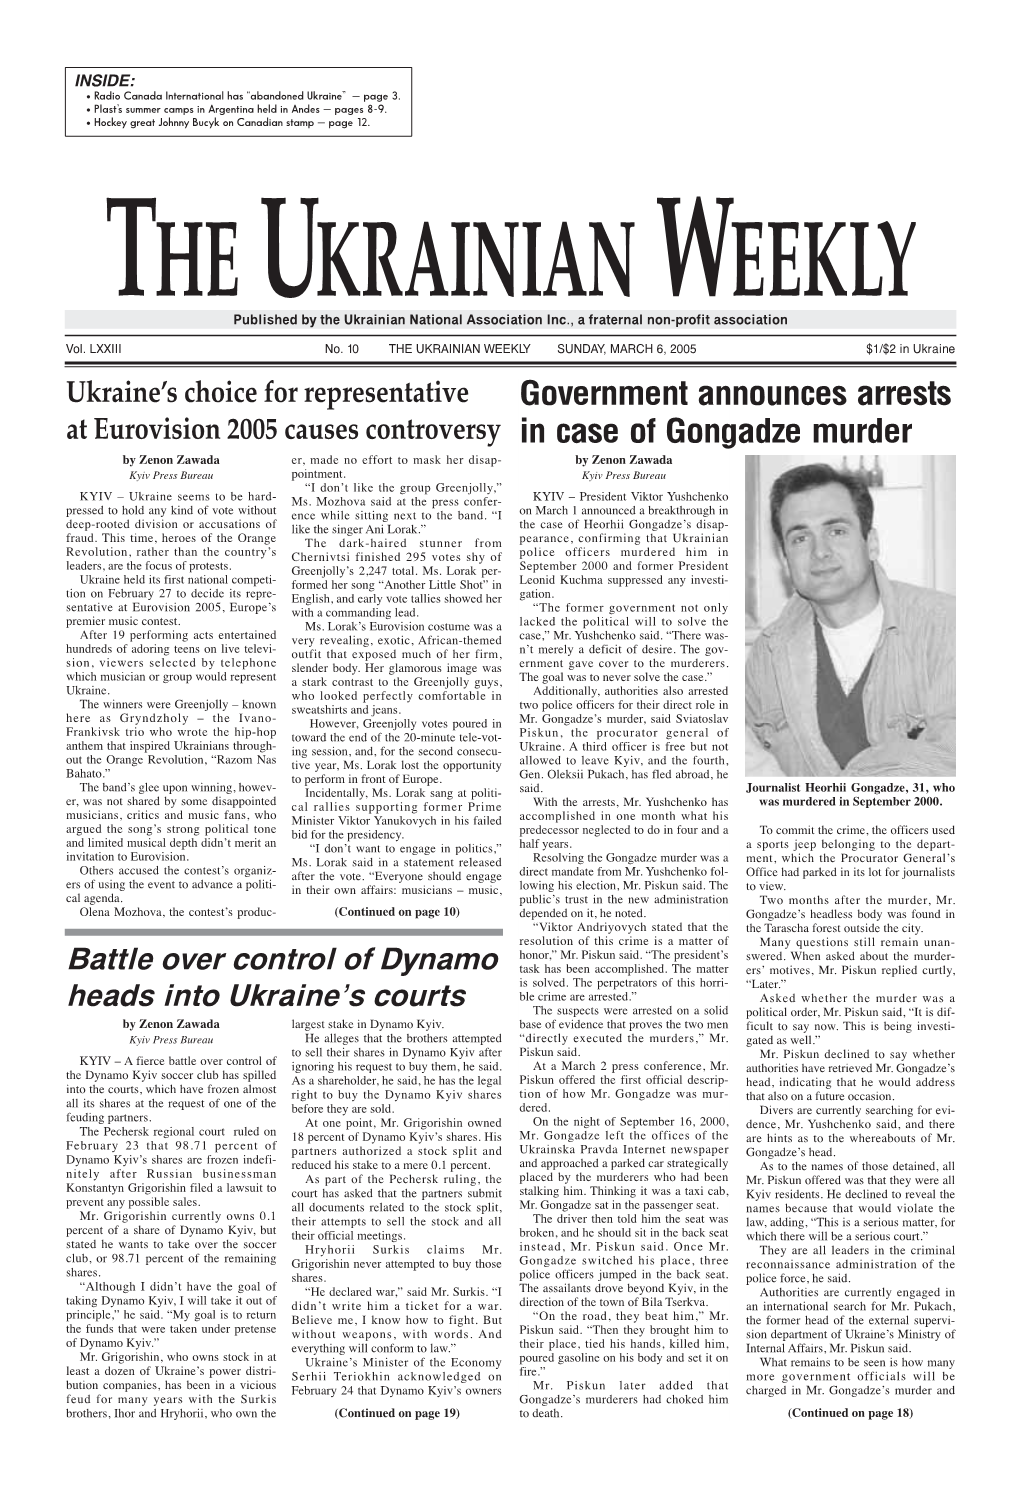 The Ukrainian Weekly 2005, No.10